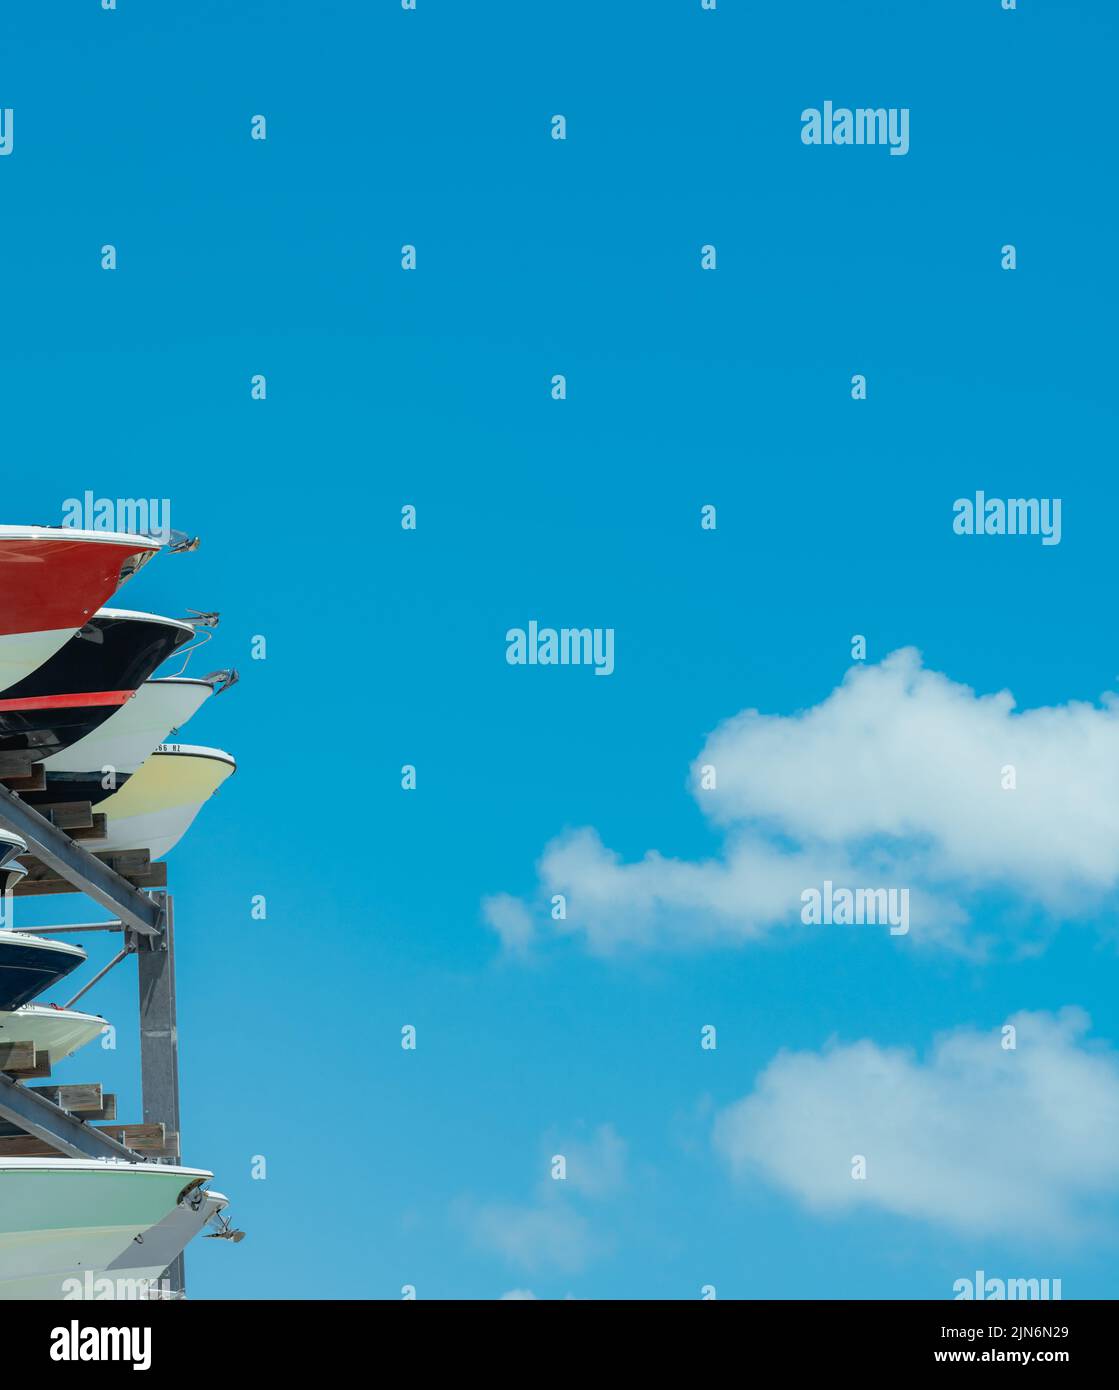 Himmelblau schöne Tagesboote Farben miami Stockfoto